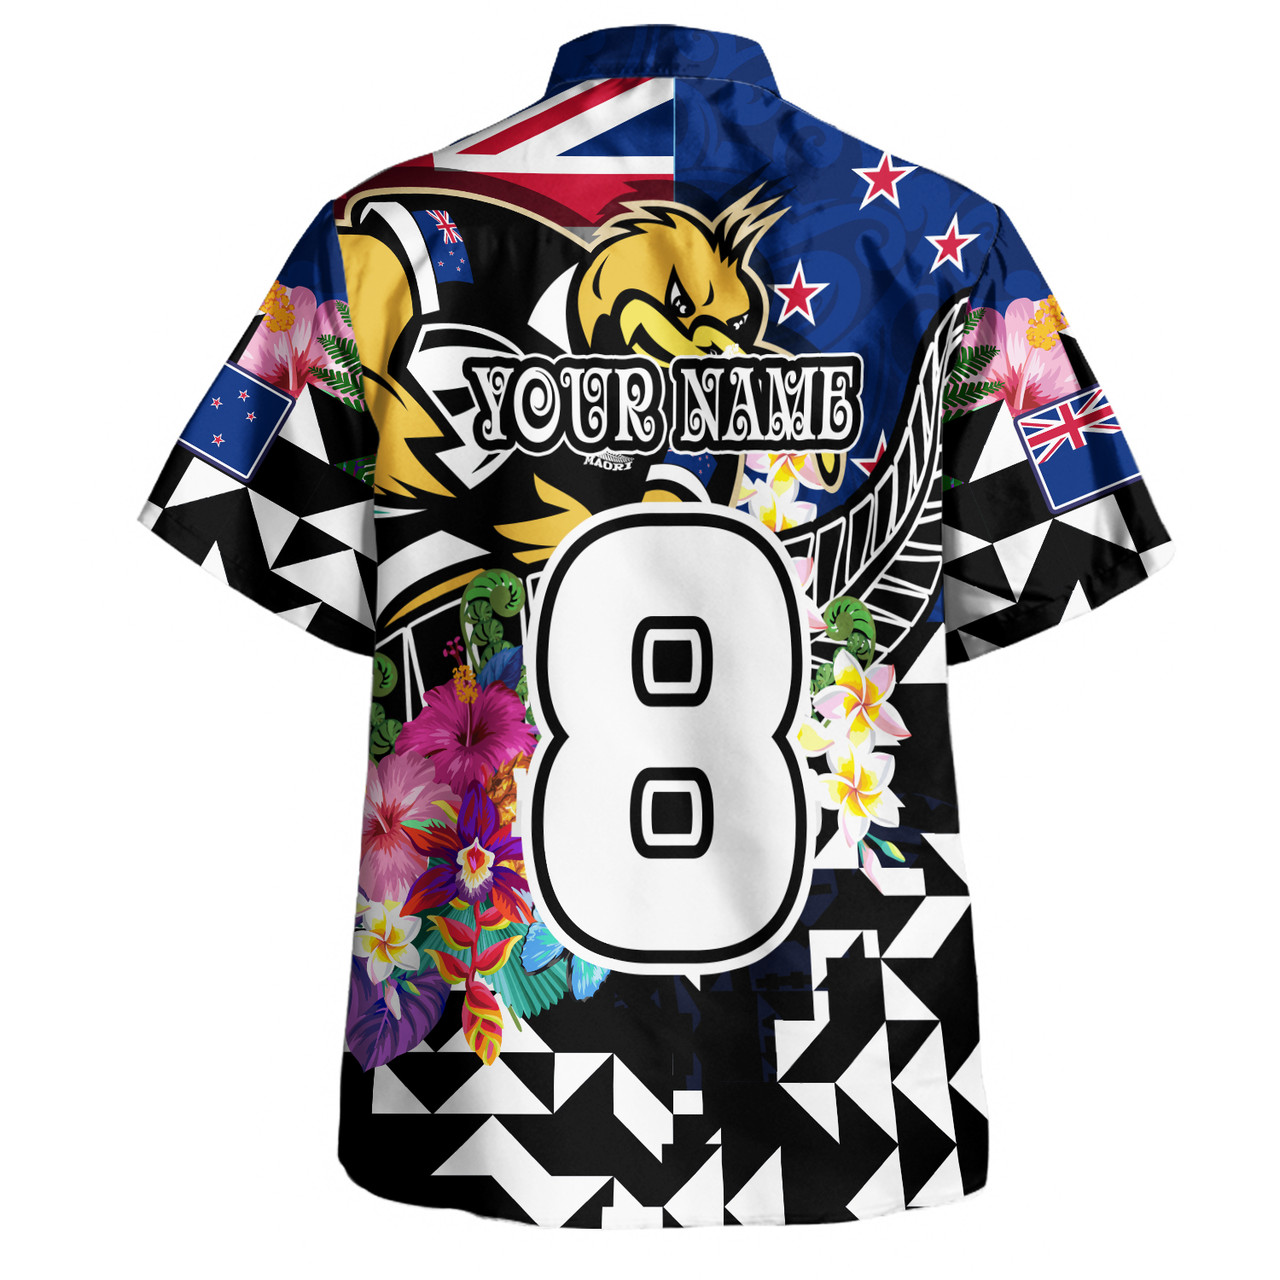 New Zealand Hawaiian Shirt Custom Maori Kiwis Rugby Silver Fern Black Hexagon Tropical Jersey